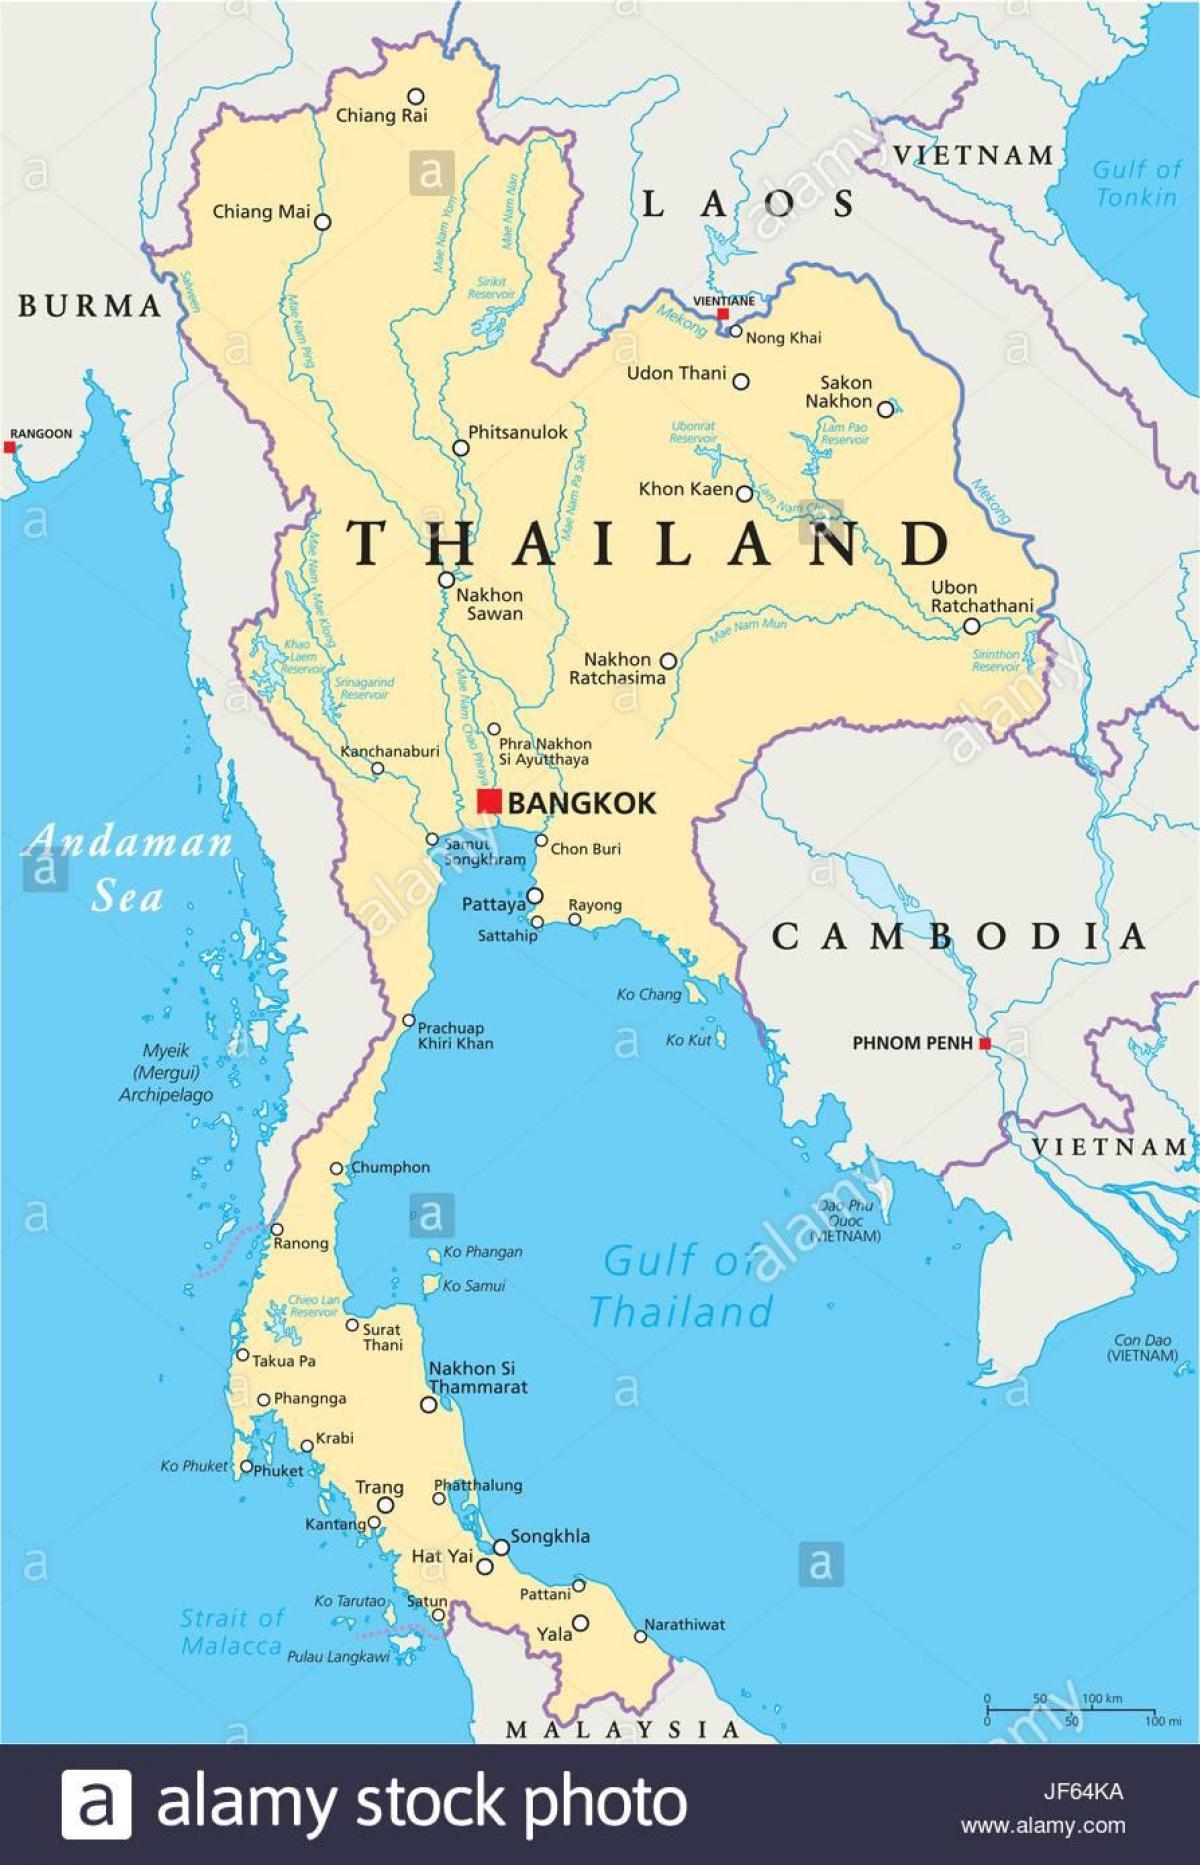 bangkok, tailandia mapa del mundo